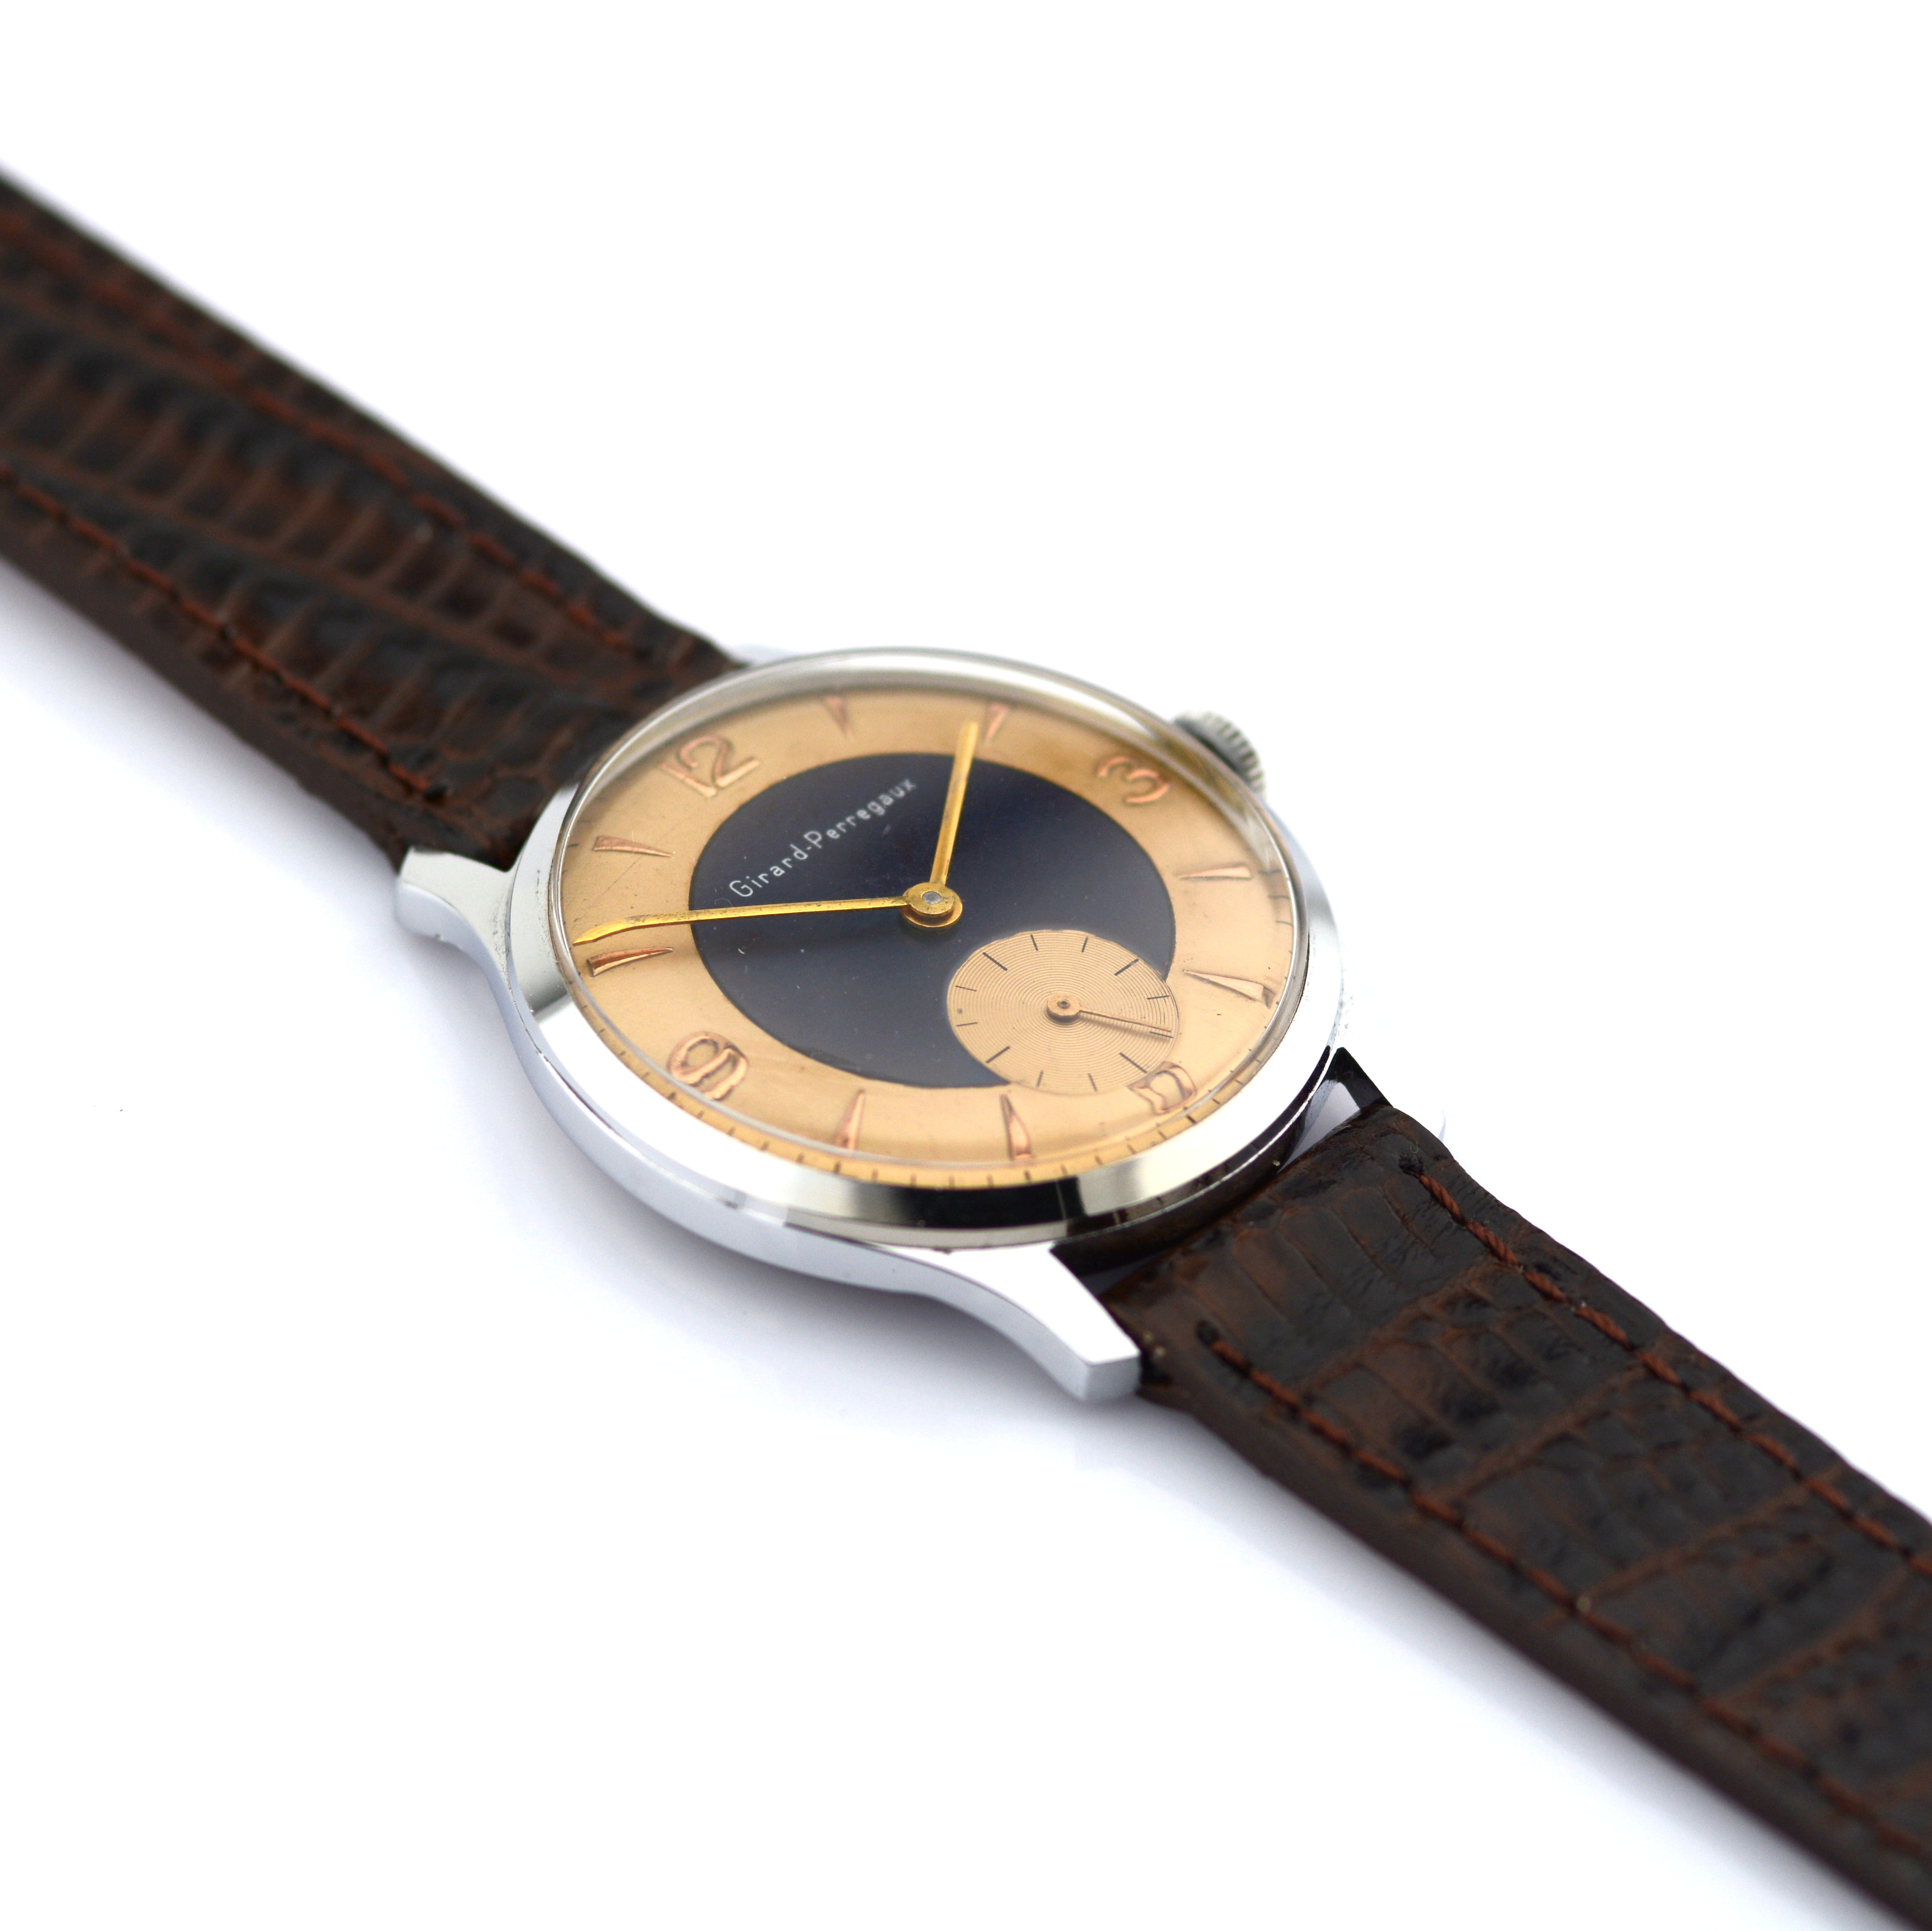 Girard-Perregaux / Vintage - Gentlmen's Steel Wrist Watch - Image 6 of 9